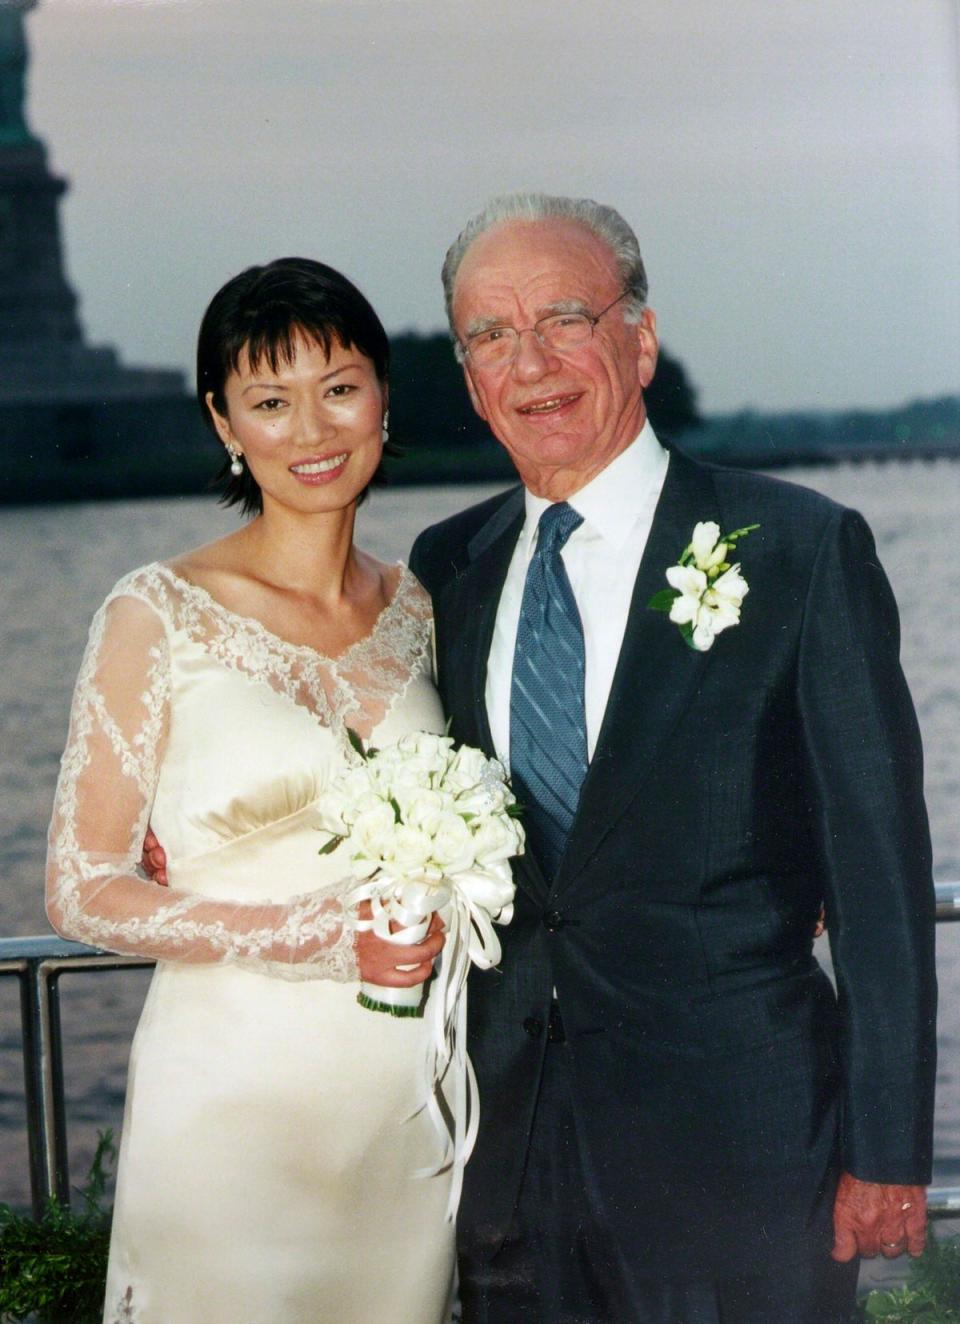 Wendi Deng and Rupert Murdoch on their wedding day in 1999 (REUTERS)